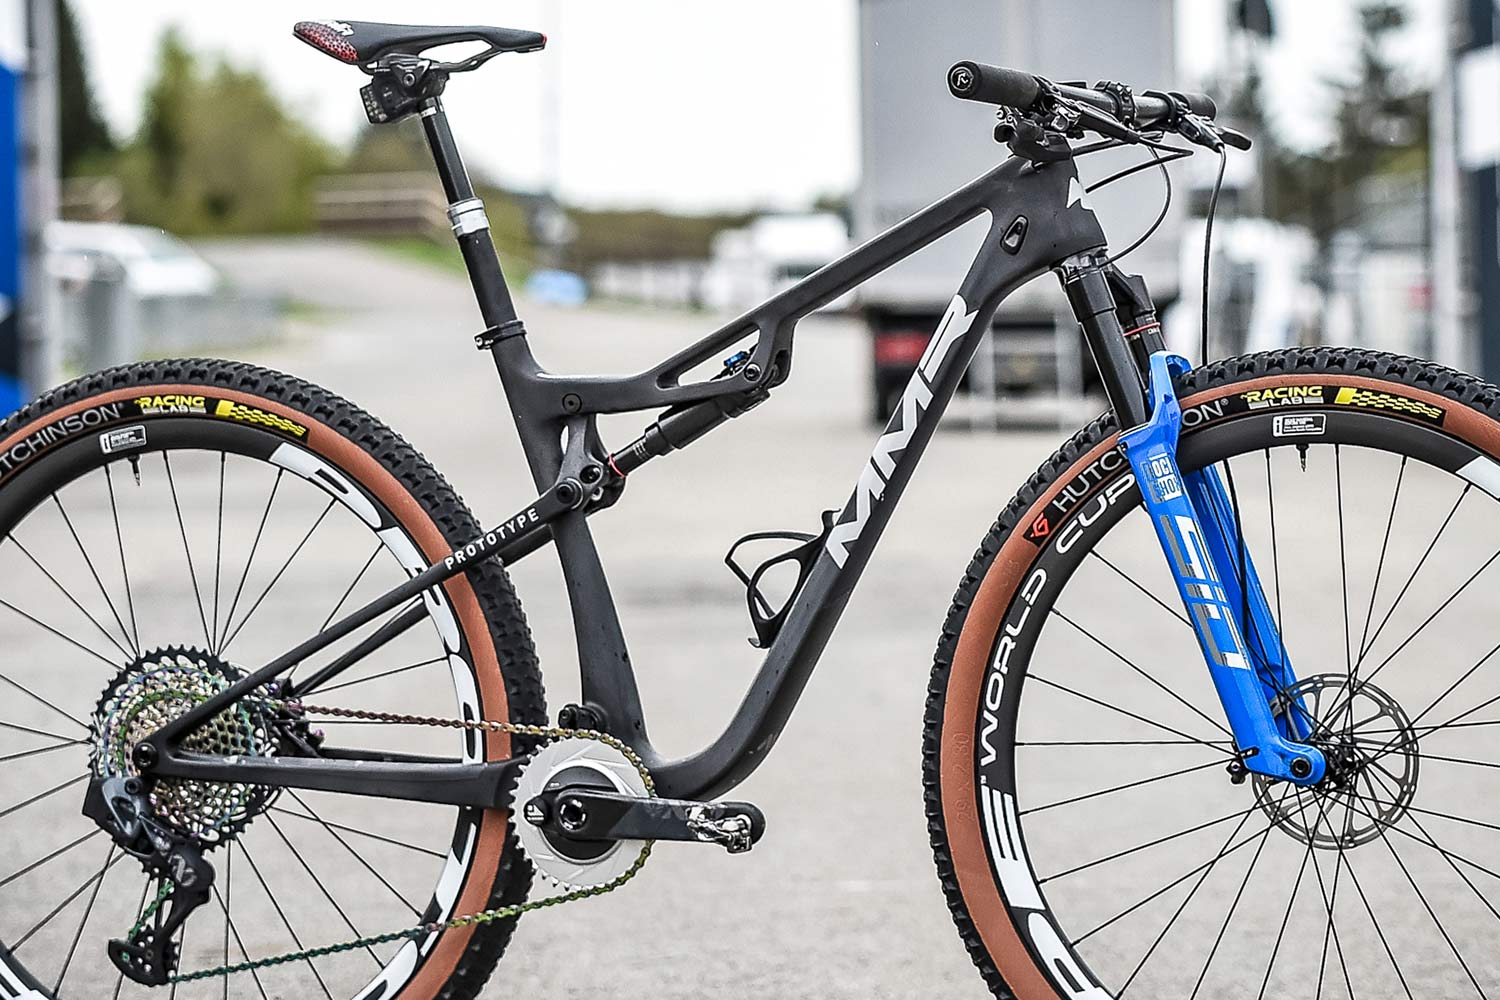 2021 MMR Kenta 29 prototype XC race bike, 100mm full-suspension carbon cross-country mountain bike, detail